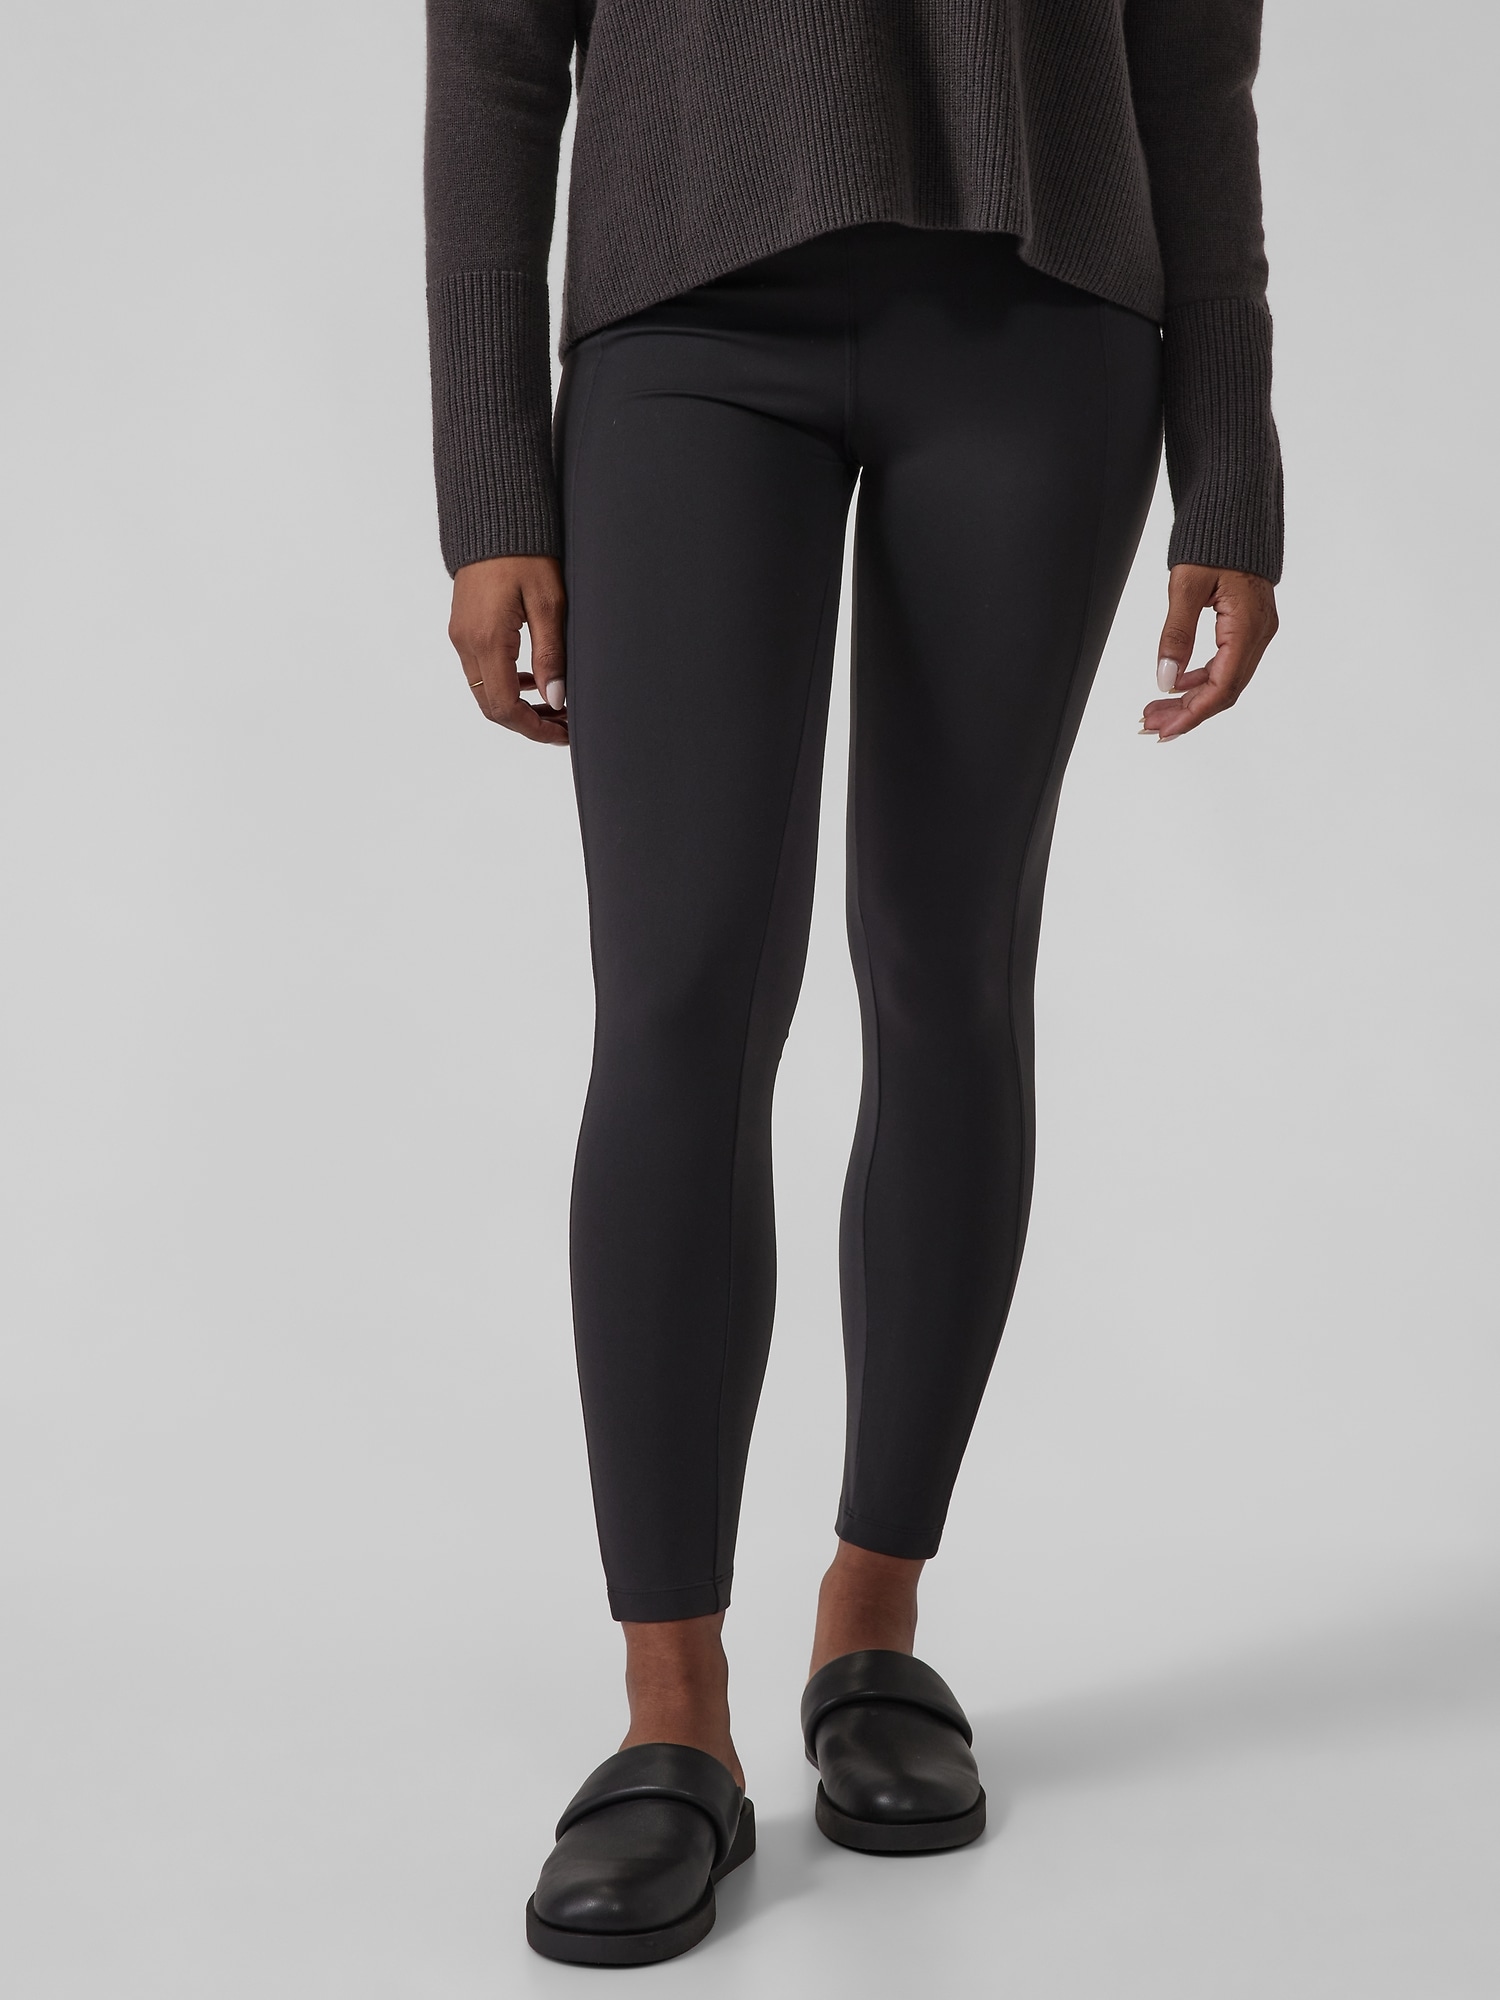 Athleta Womens Ankle Length Solid Gray Athletic Leggings Gray Medium GUC -  $15 - From Tiffany